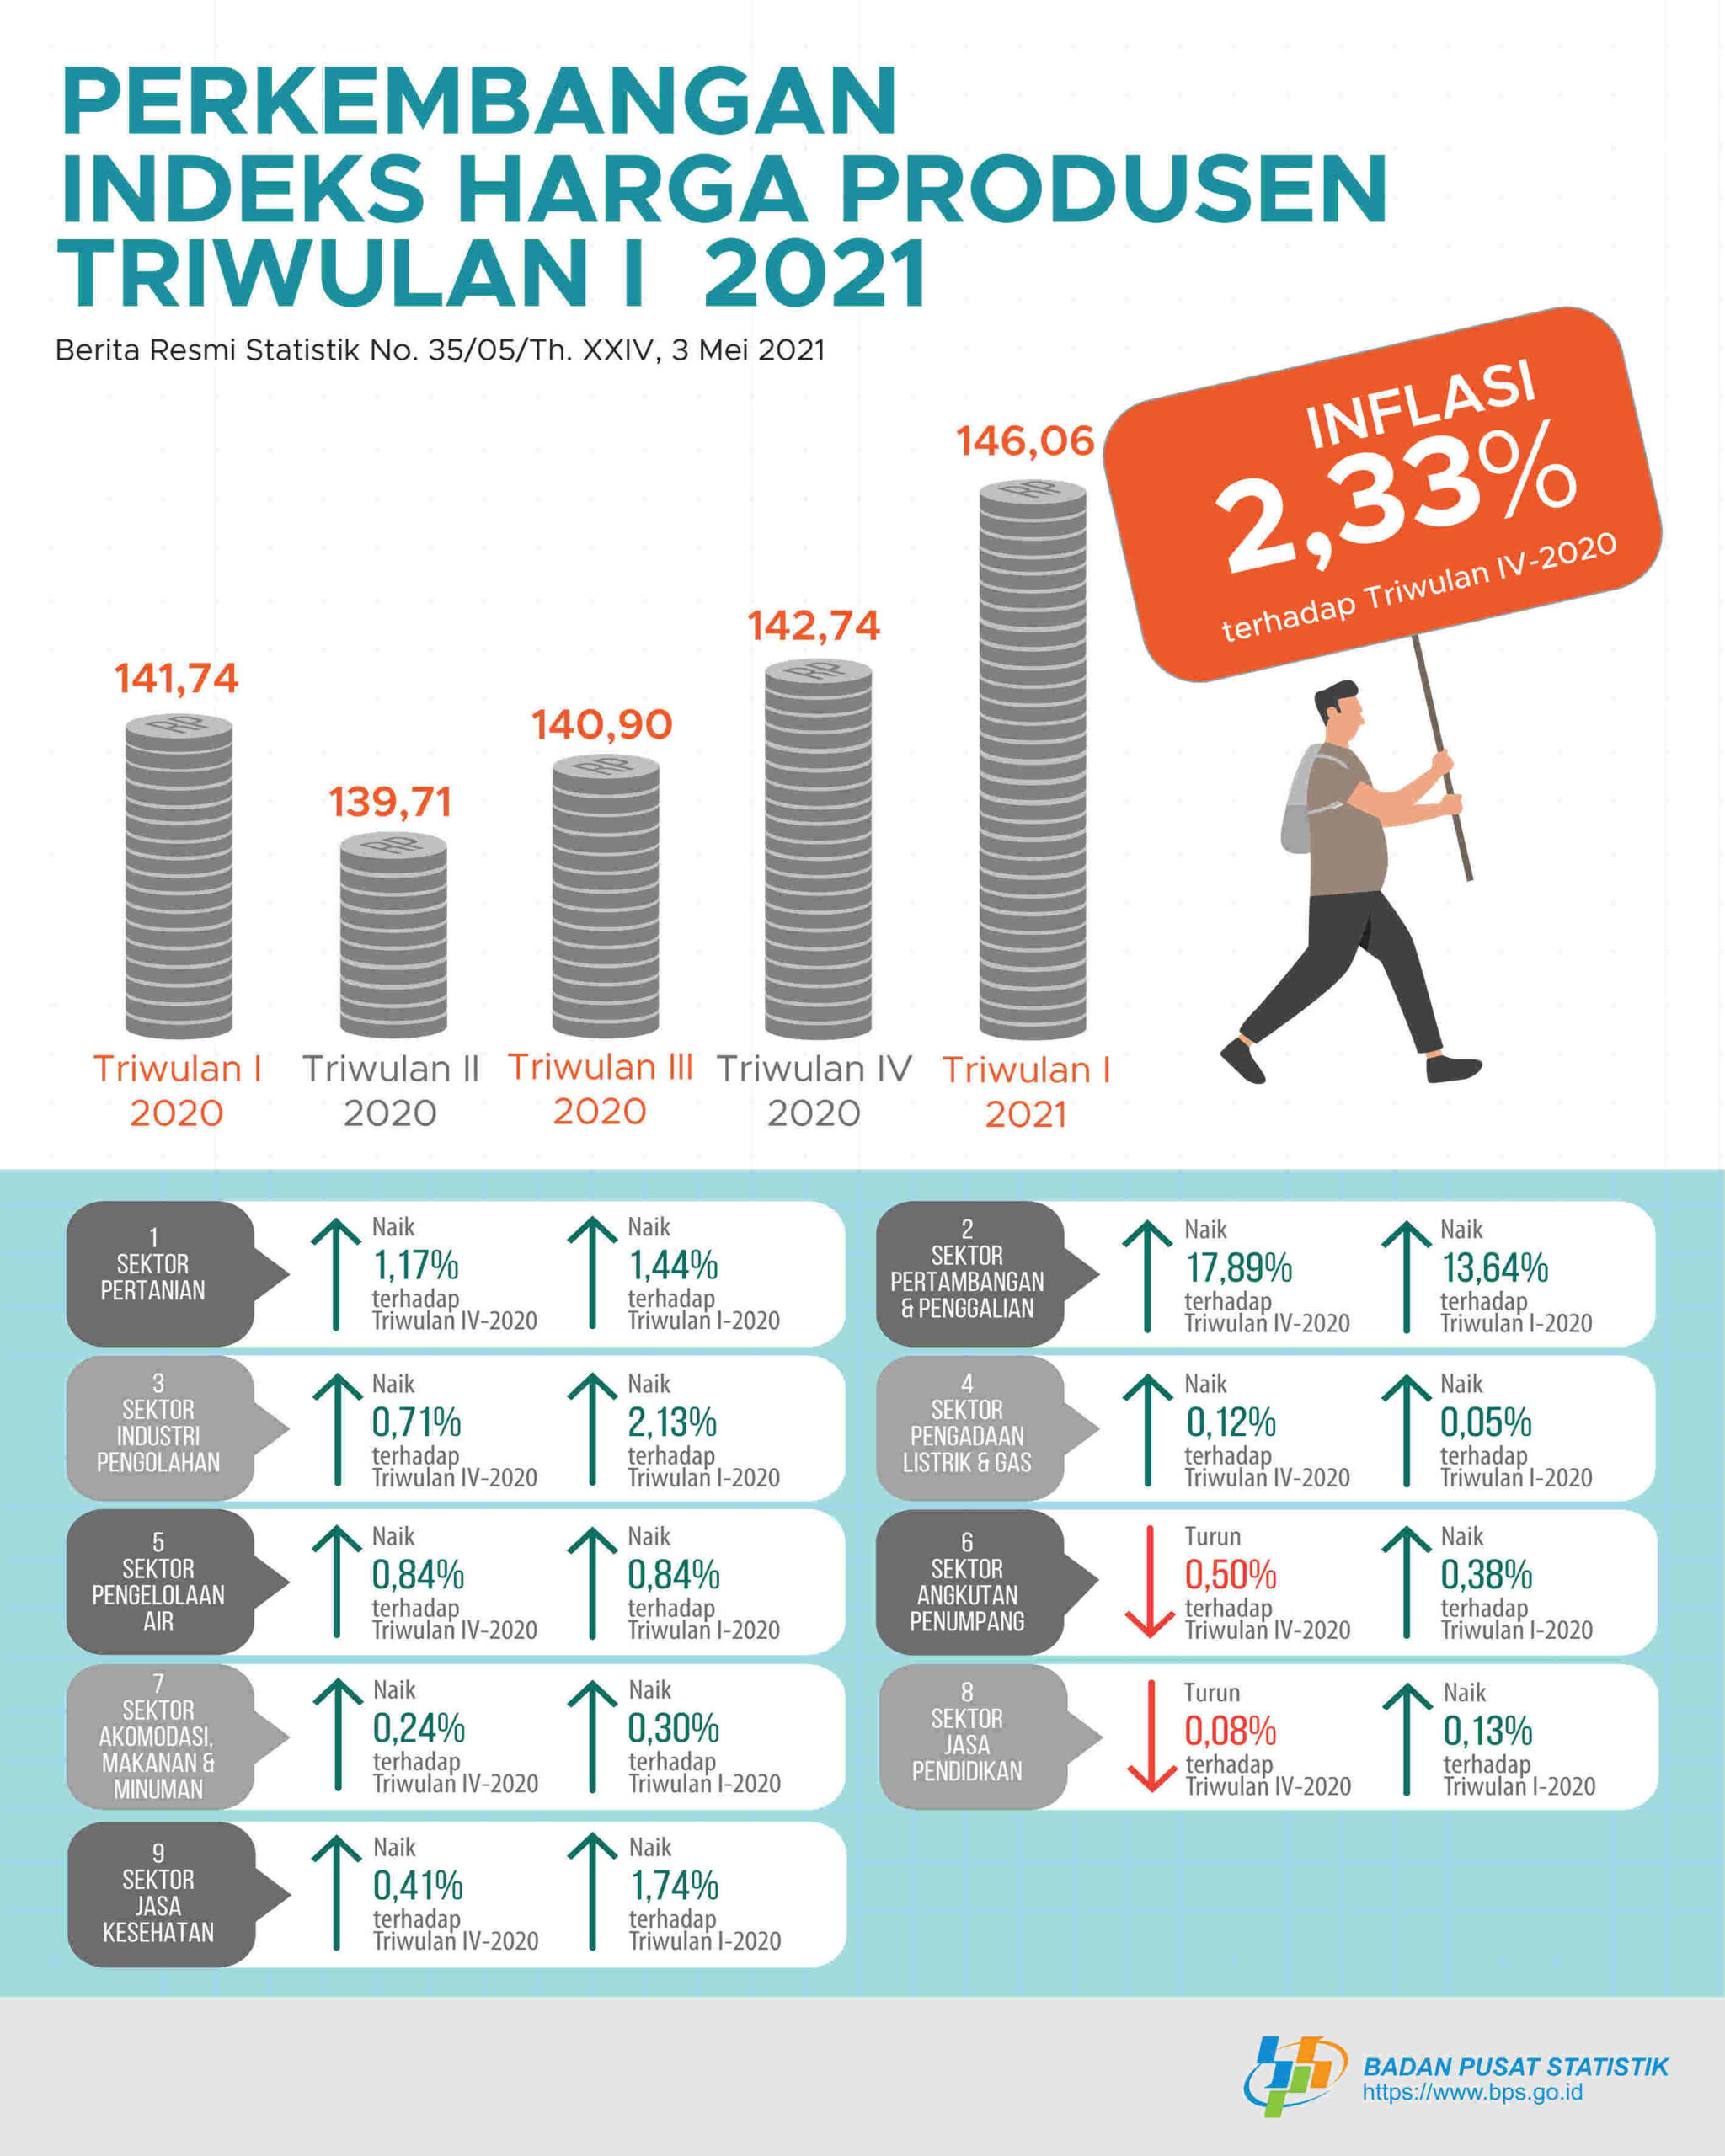 Harga Produsen pada Triwulan I-2021 Mengalami Inflasi 2,33 Persen